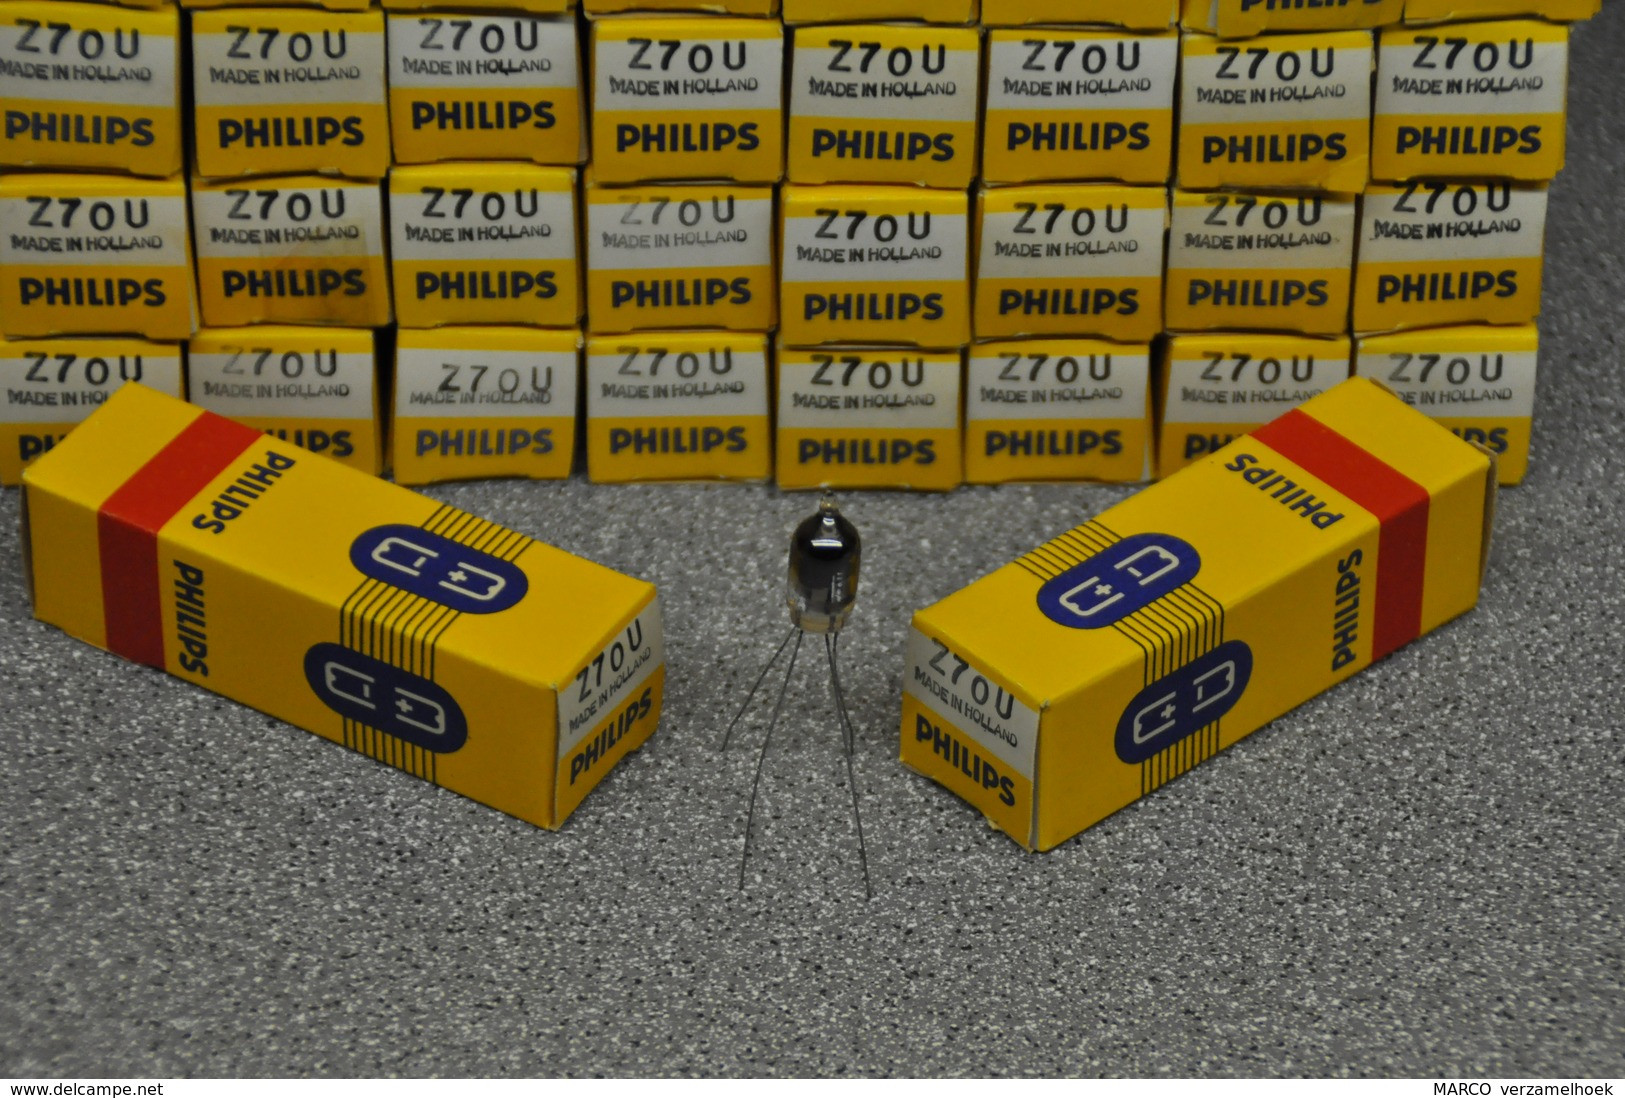 Philips Buis-röhre-tube Z70U  (7710 - GR43) Thyratron Tube New (jukebox) Neonbuisje Glimmröhre - Elektronenbuis